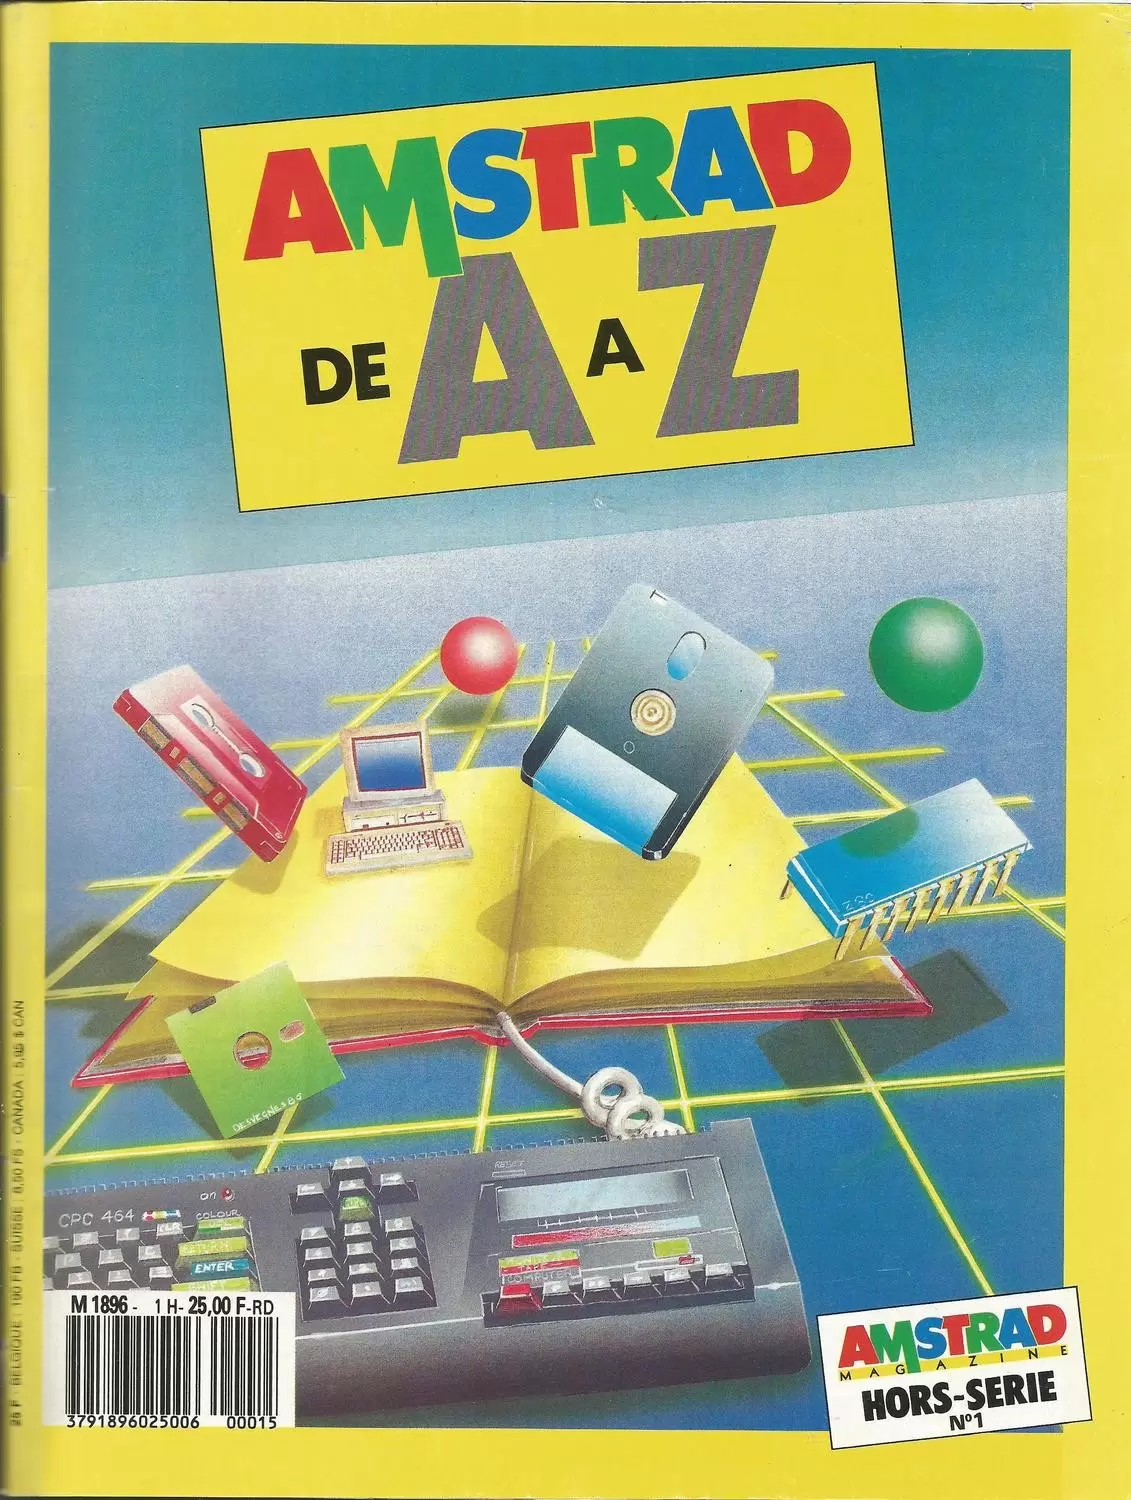 Amstrad Magazine - Amstrad Magazine - Hors série n°1